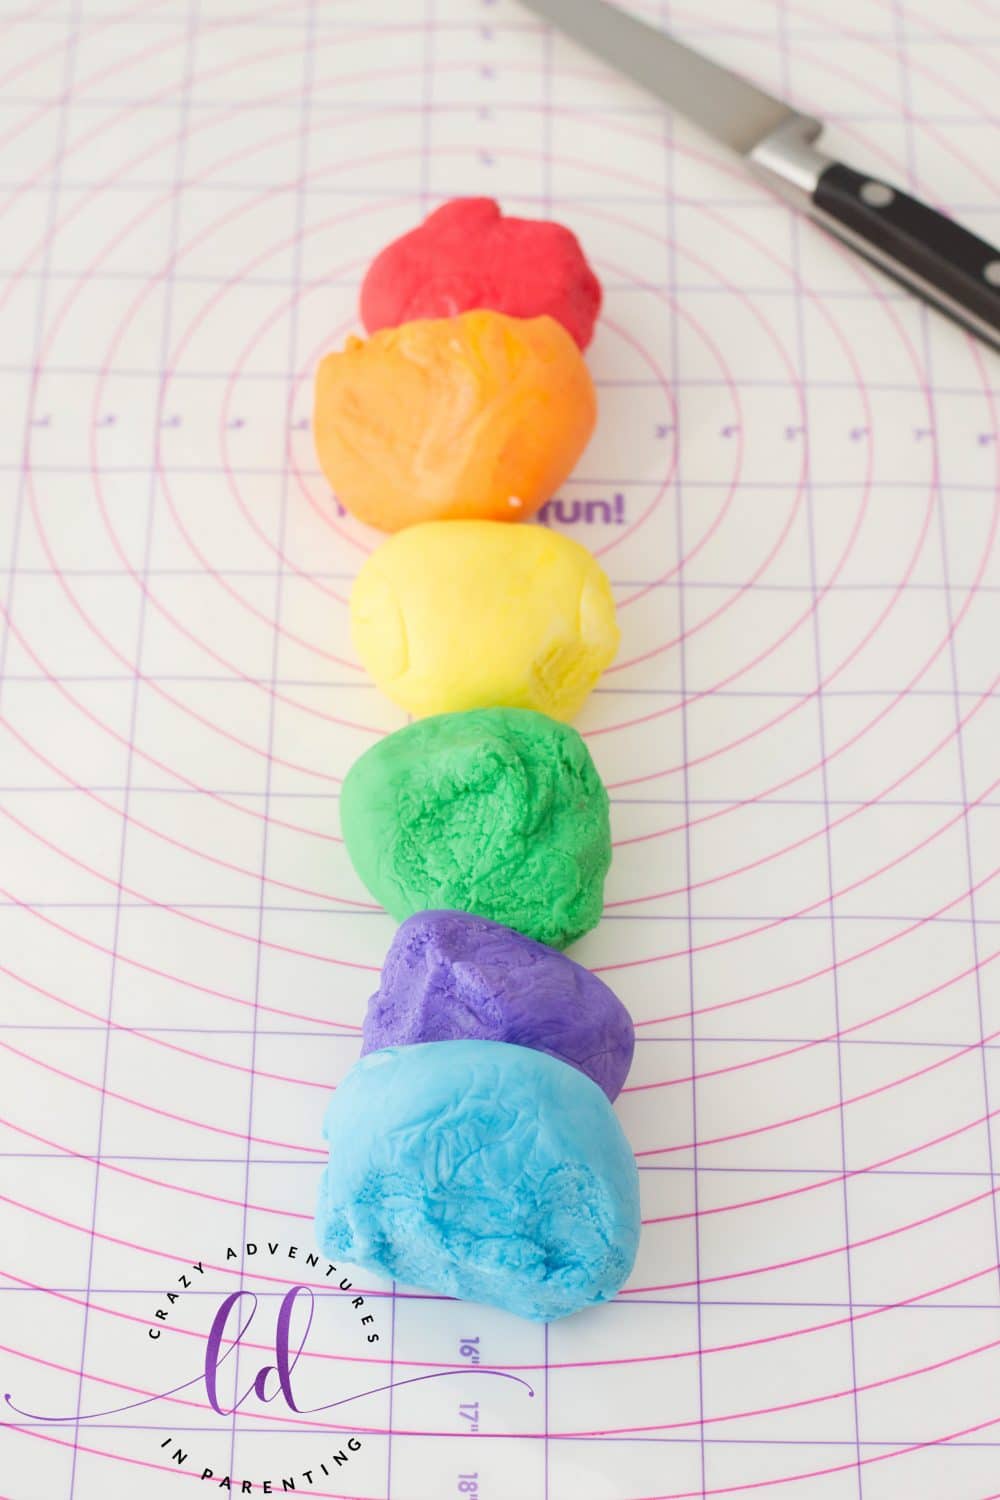 Align Fondant to Make Rainbow Cupcakes